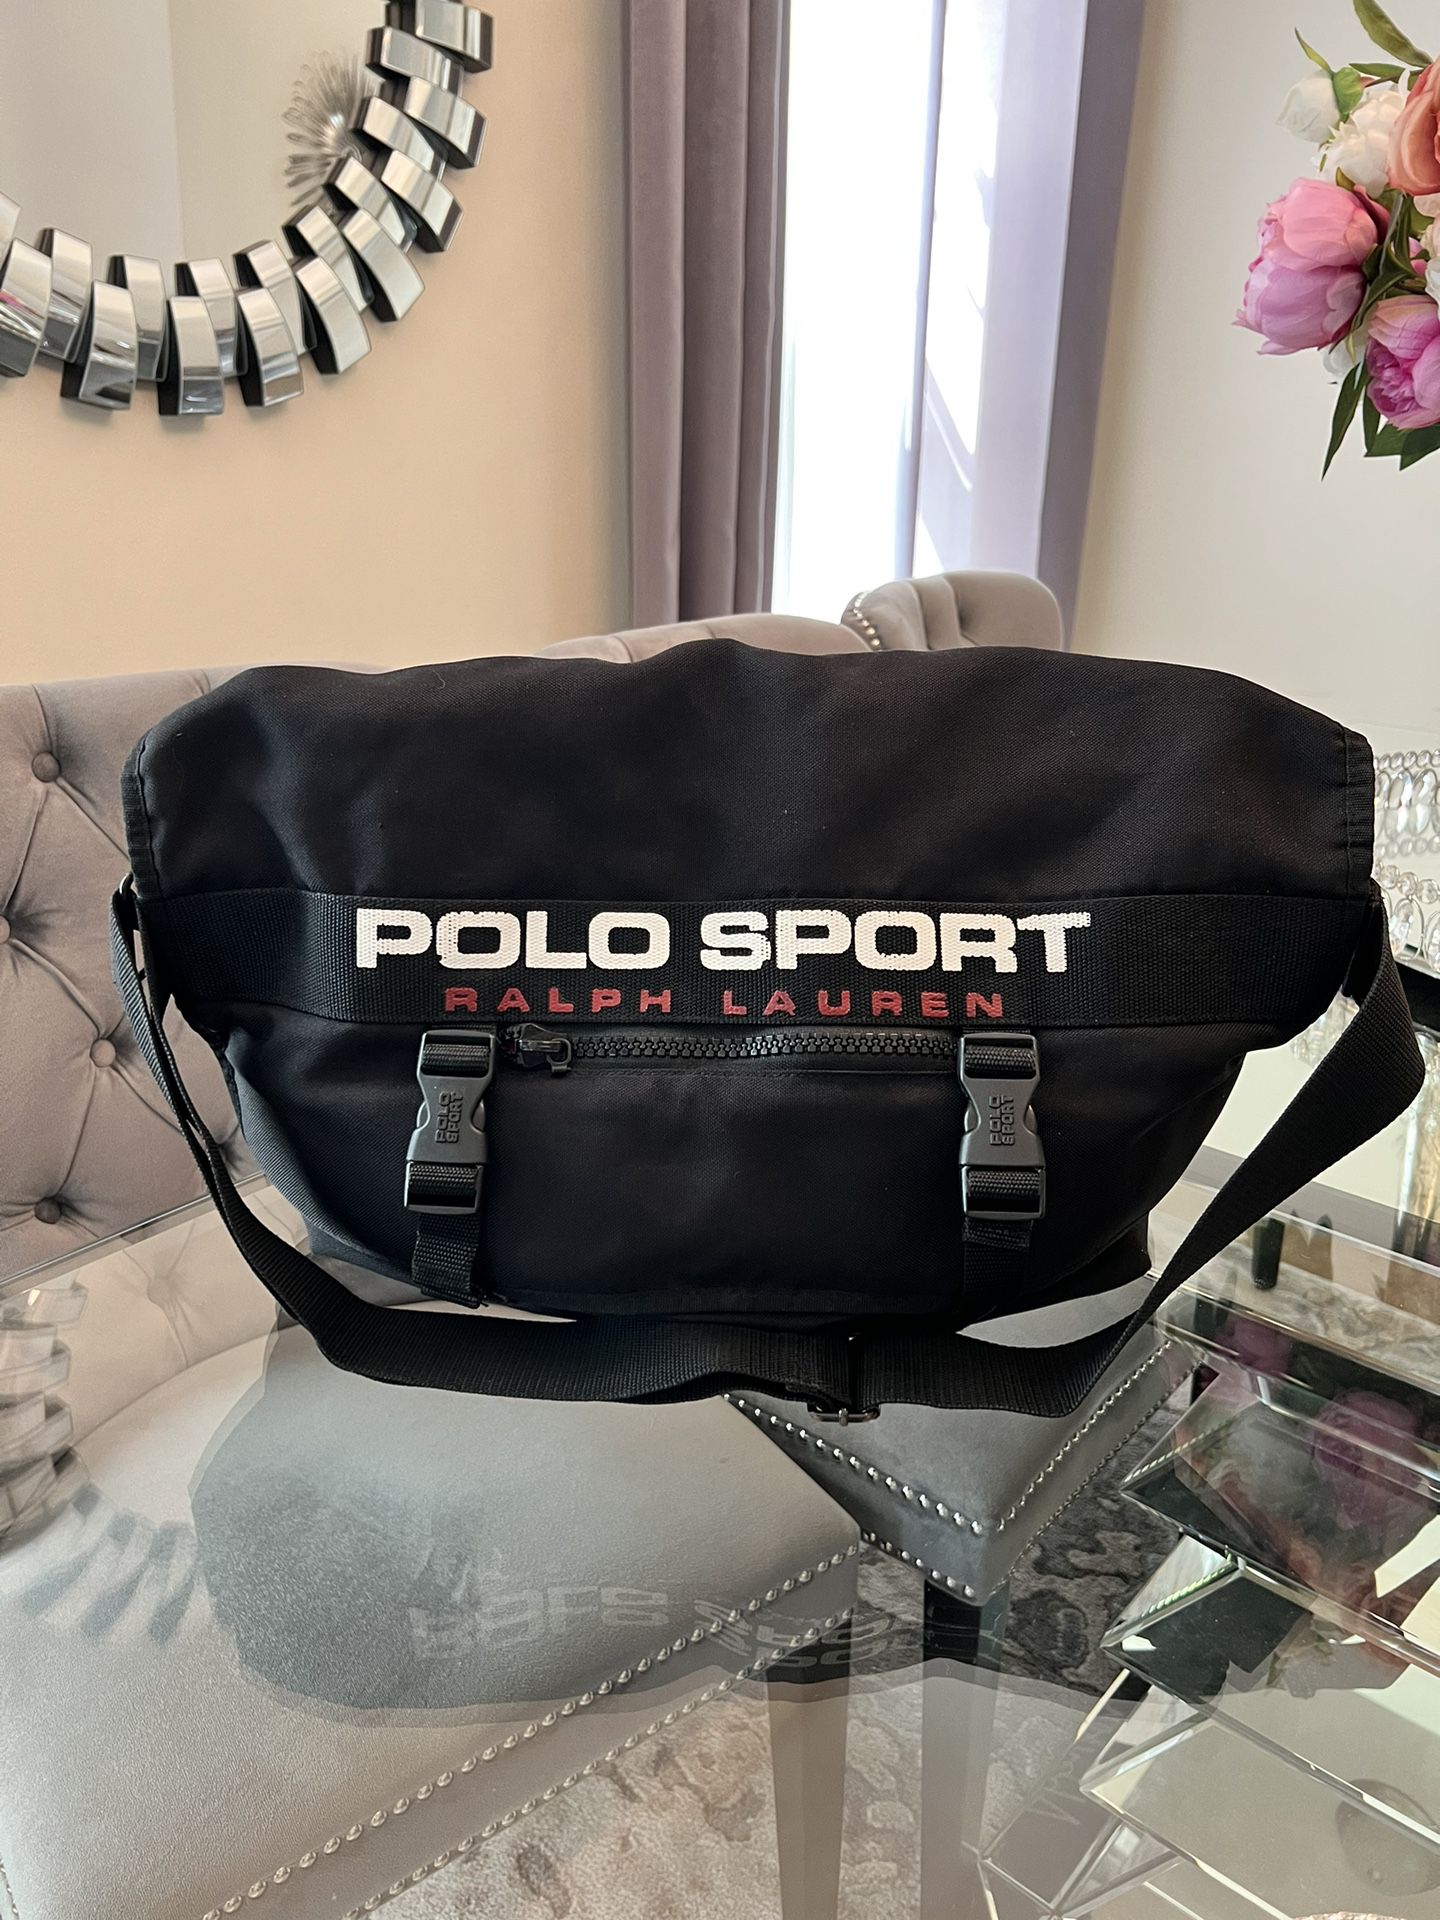 Polo Sport Ralph Lauren Messenger Shoulder Bag Crossbody Black